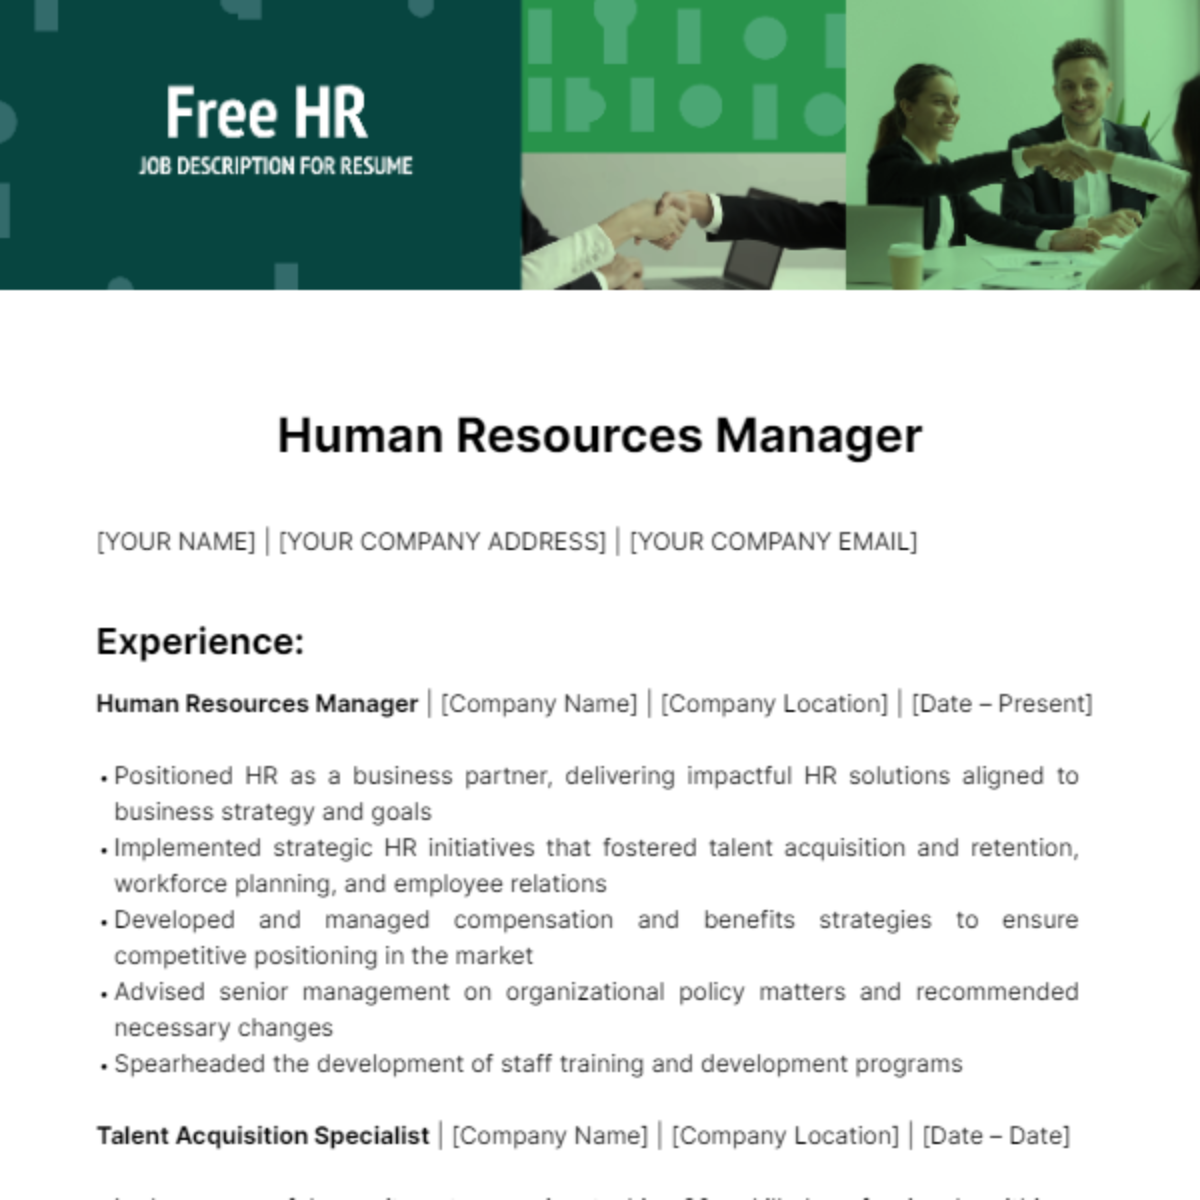 Free HR Job Description for Resume Template